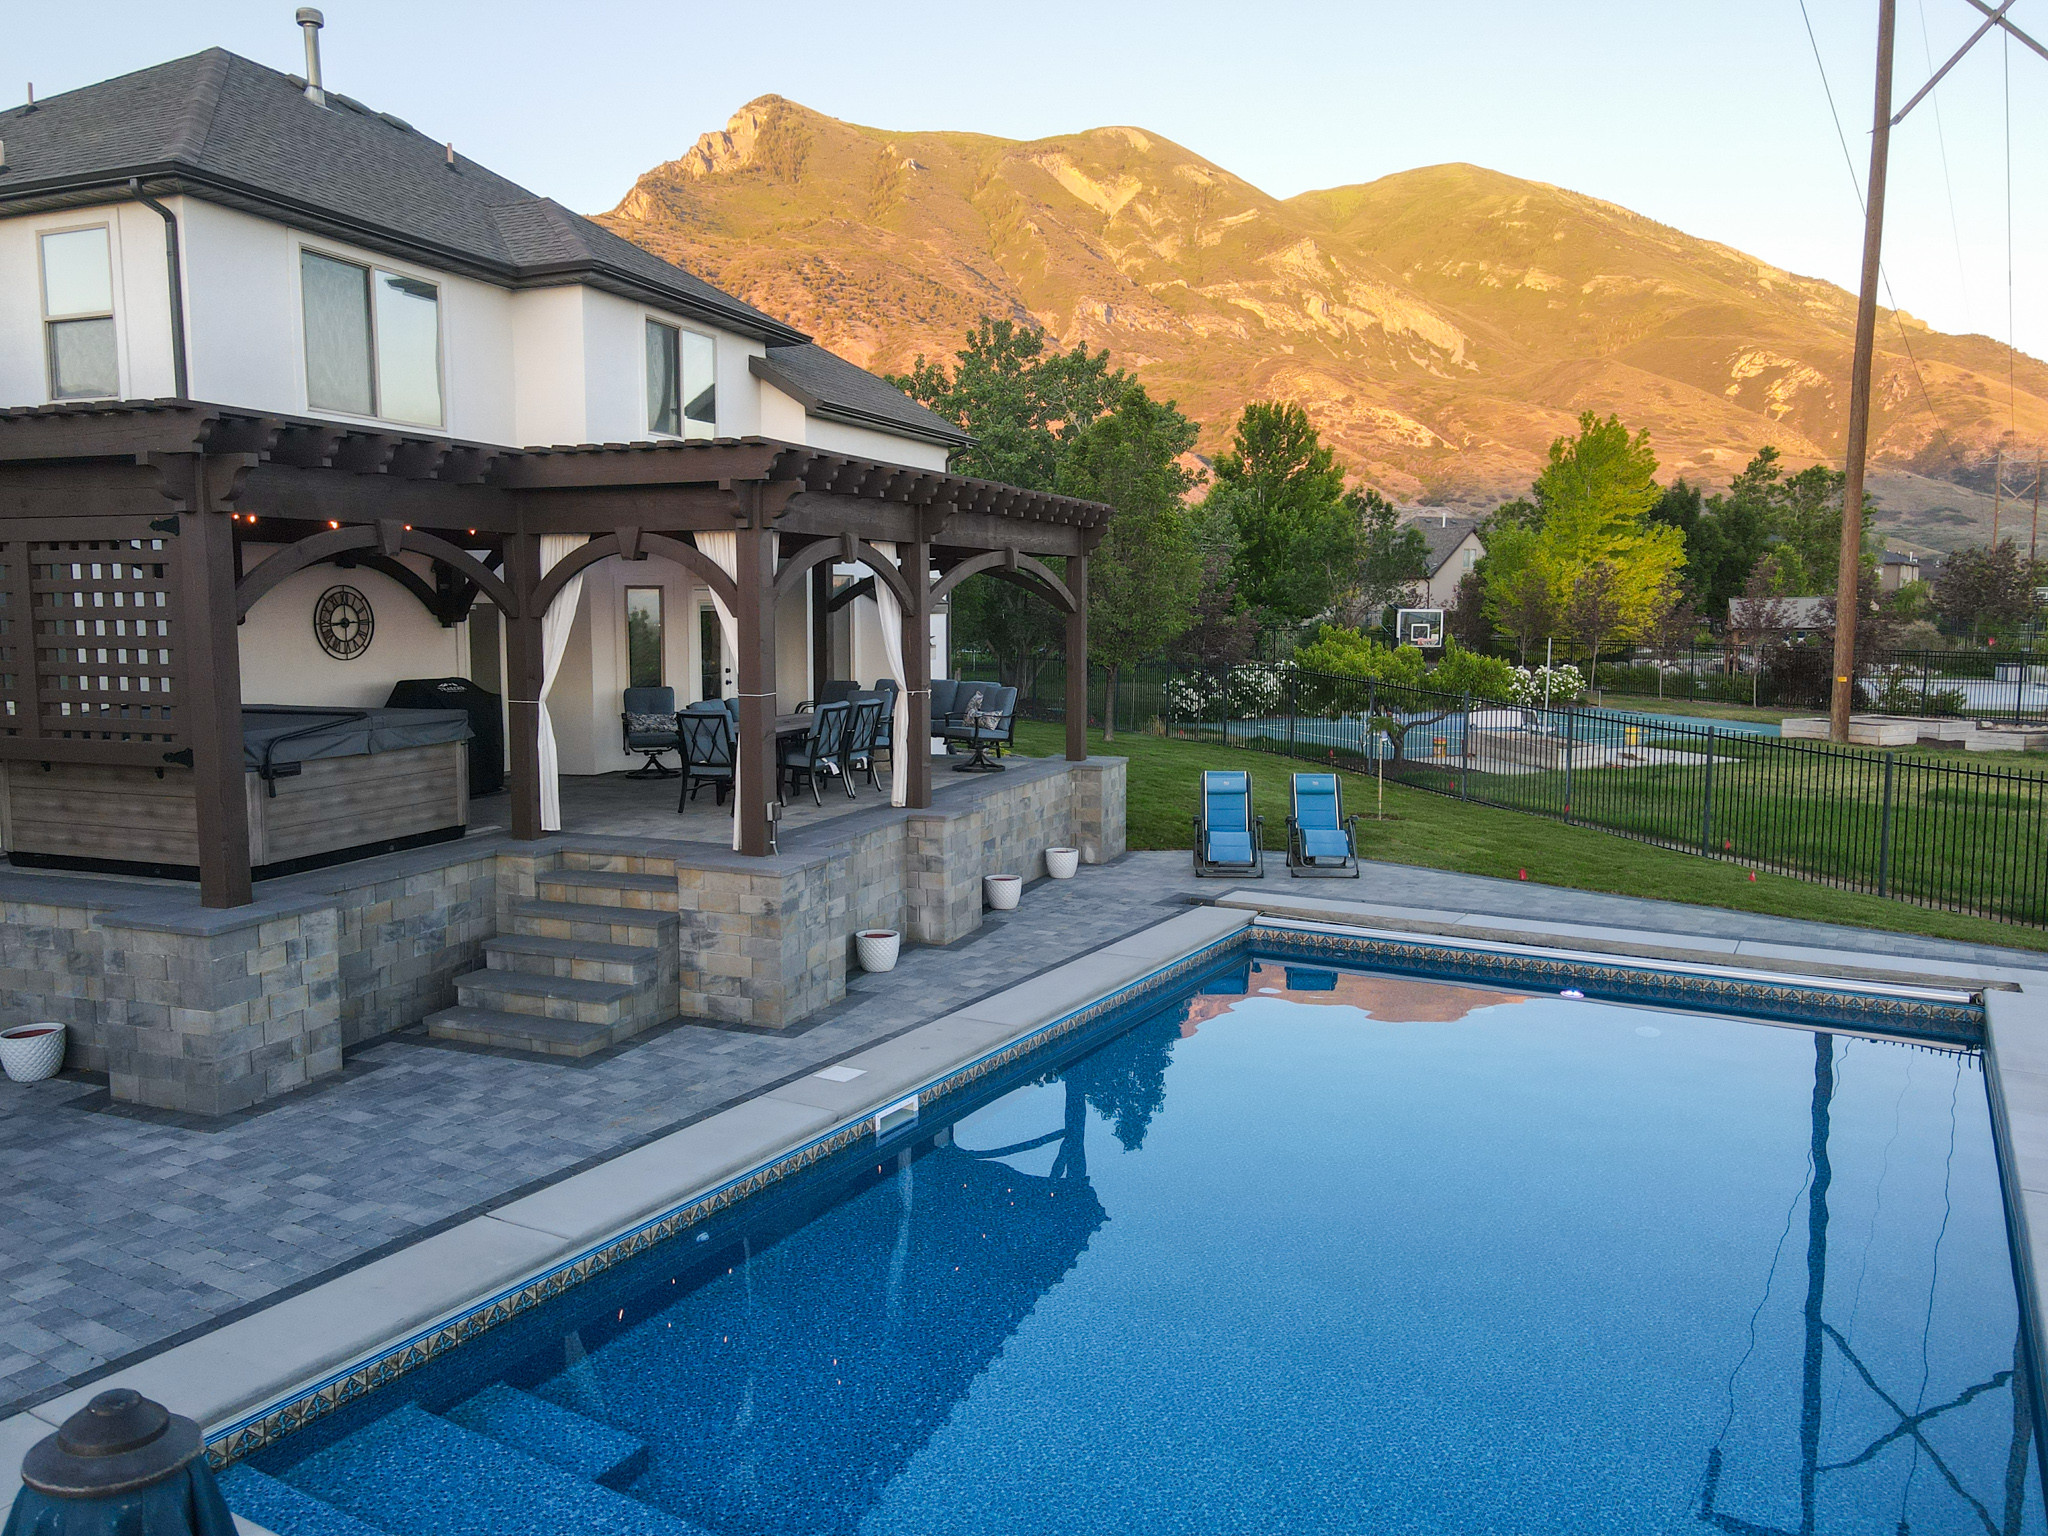 Mountain Paradise - Cedar Hills Pool Backyard